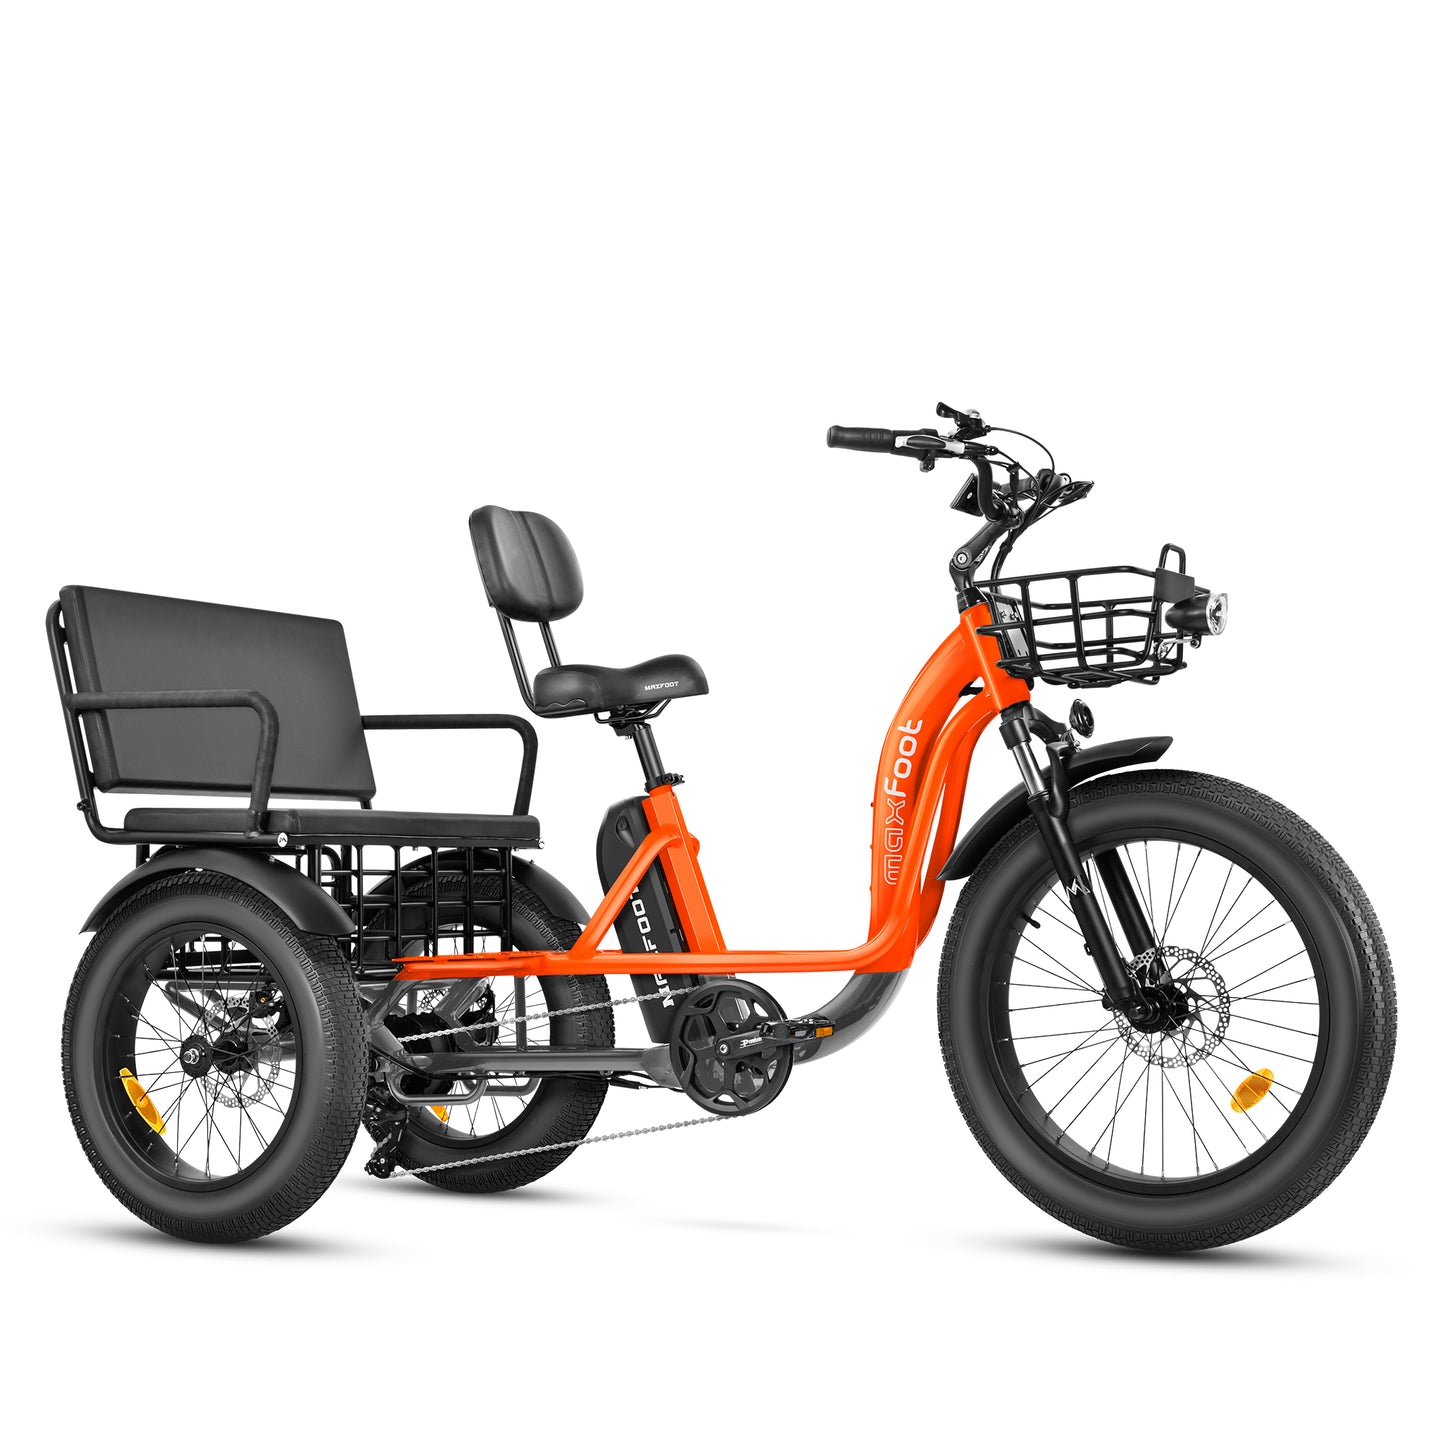 An orange mf-33 rickshaw bike